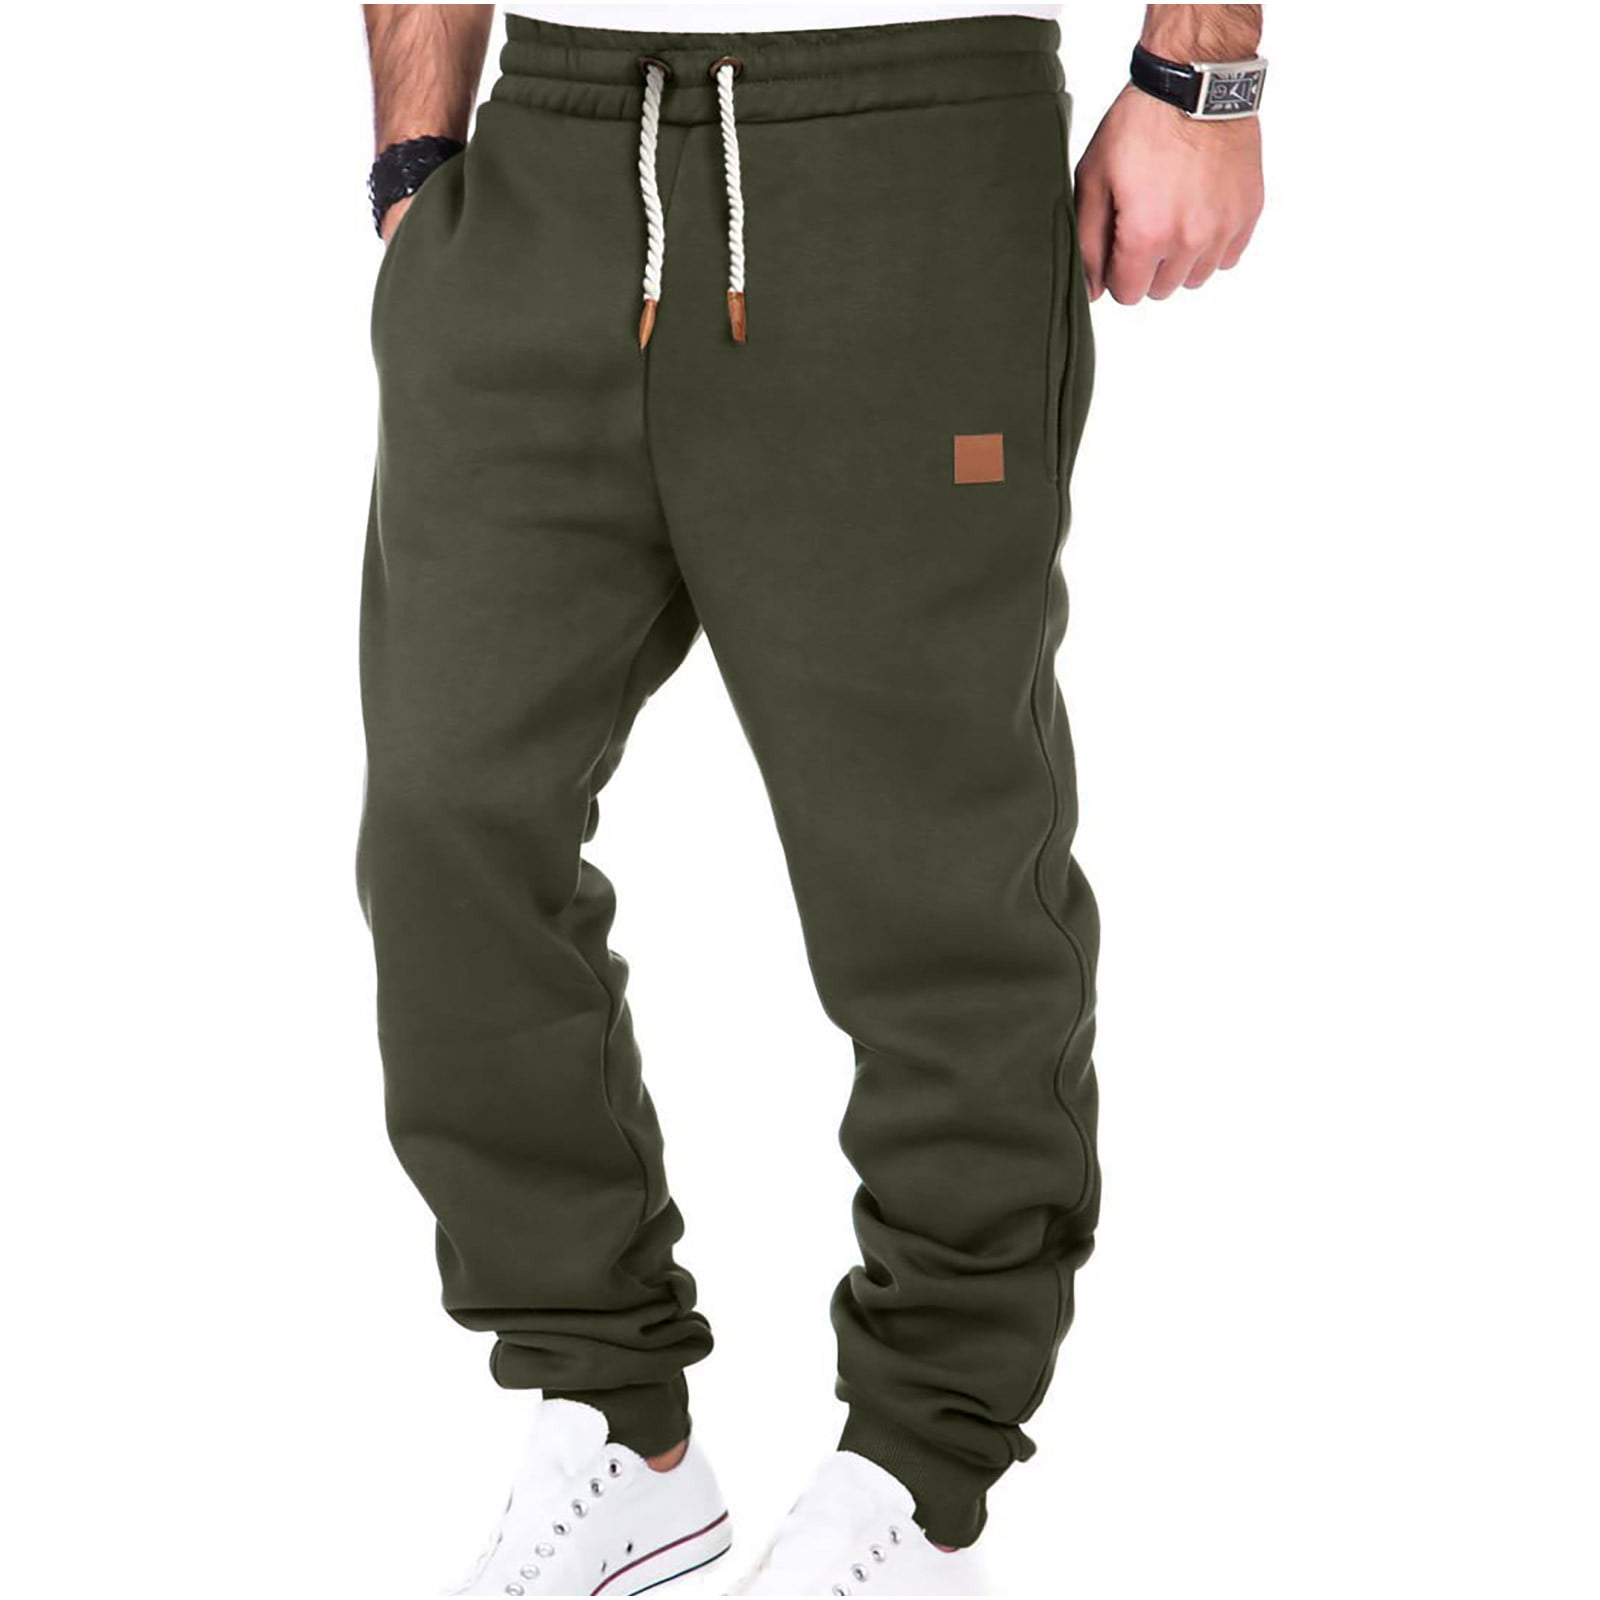 Jerdar Pants Mens Fashion Joggers Sports Pants - Cotton Pants ...